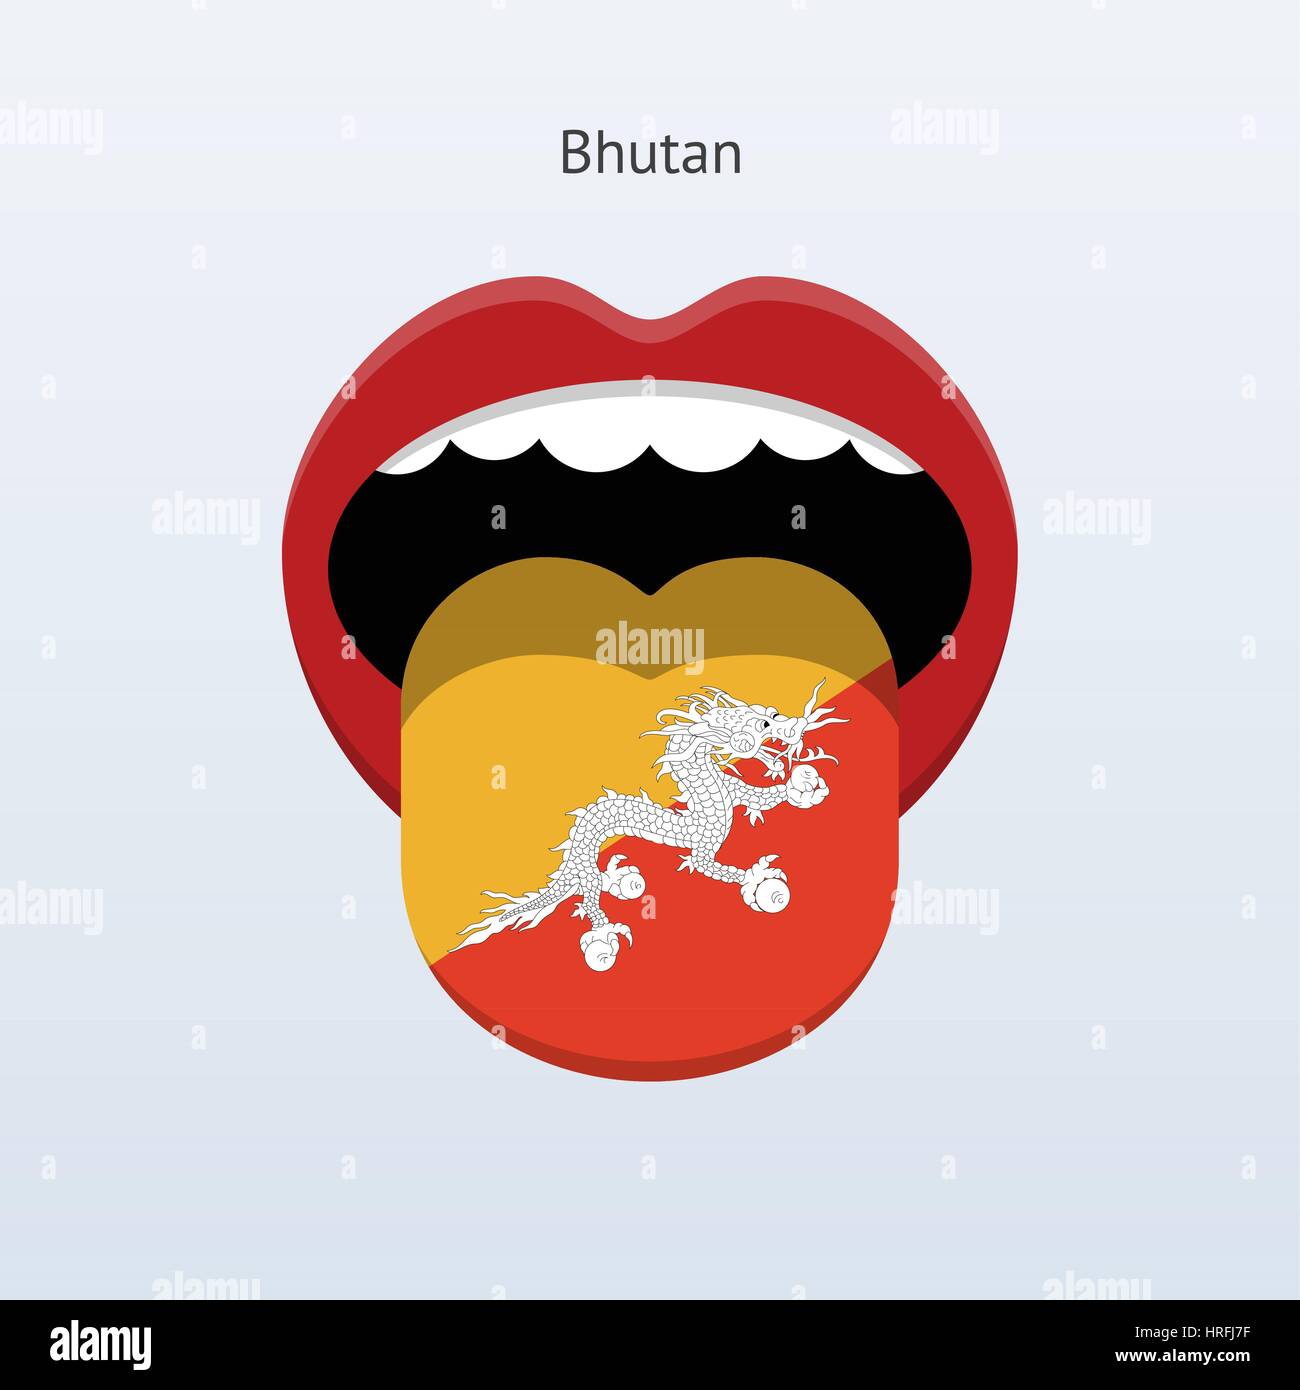 Bhutan cartoon Stock Vector Images - Alamy